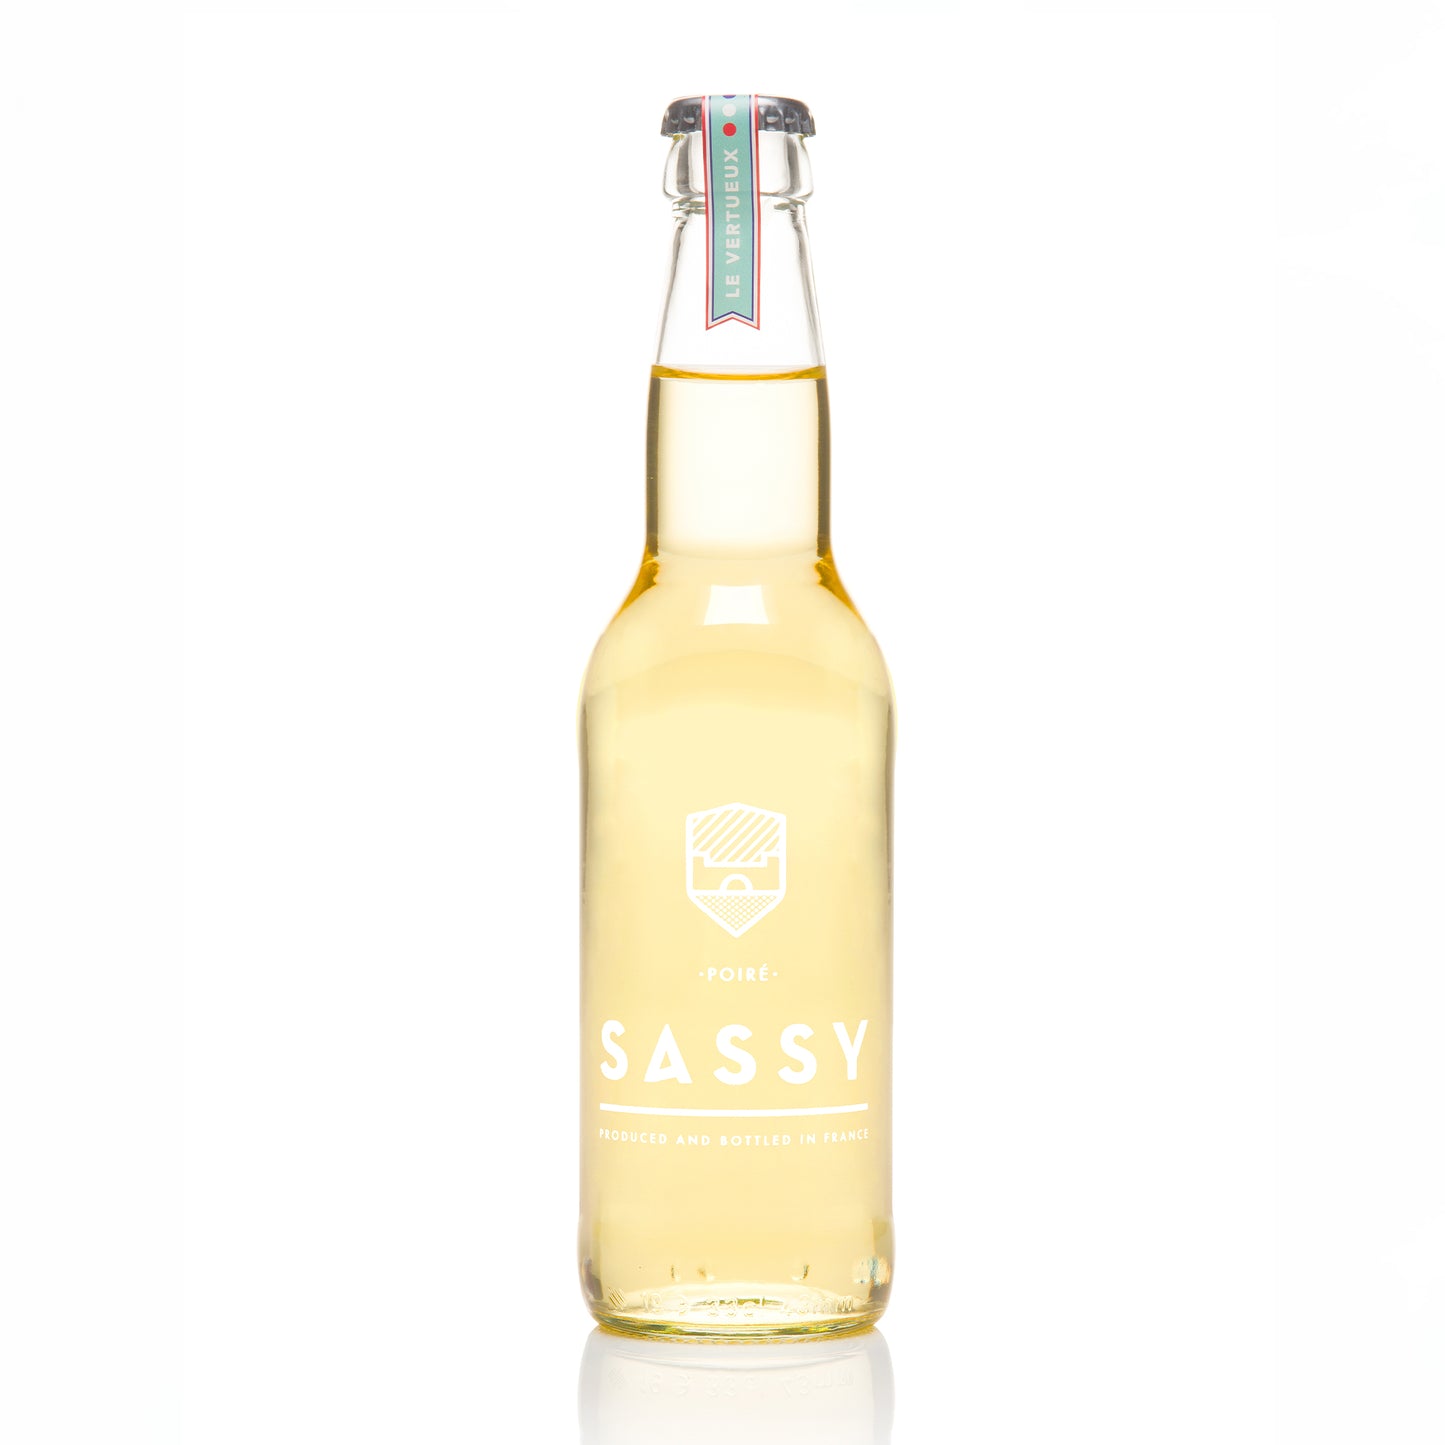 Maison SASSY Poiré - Pear Cidre - Lower Alcohol Cider